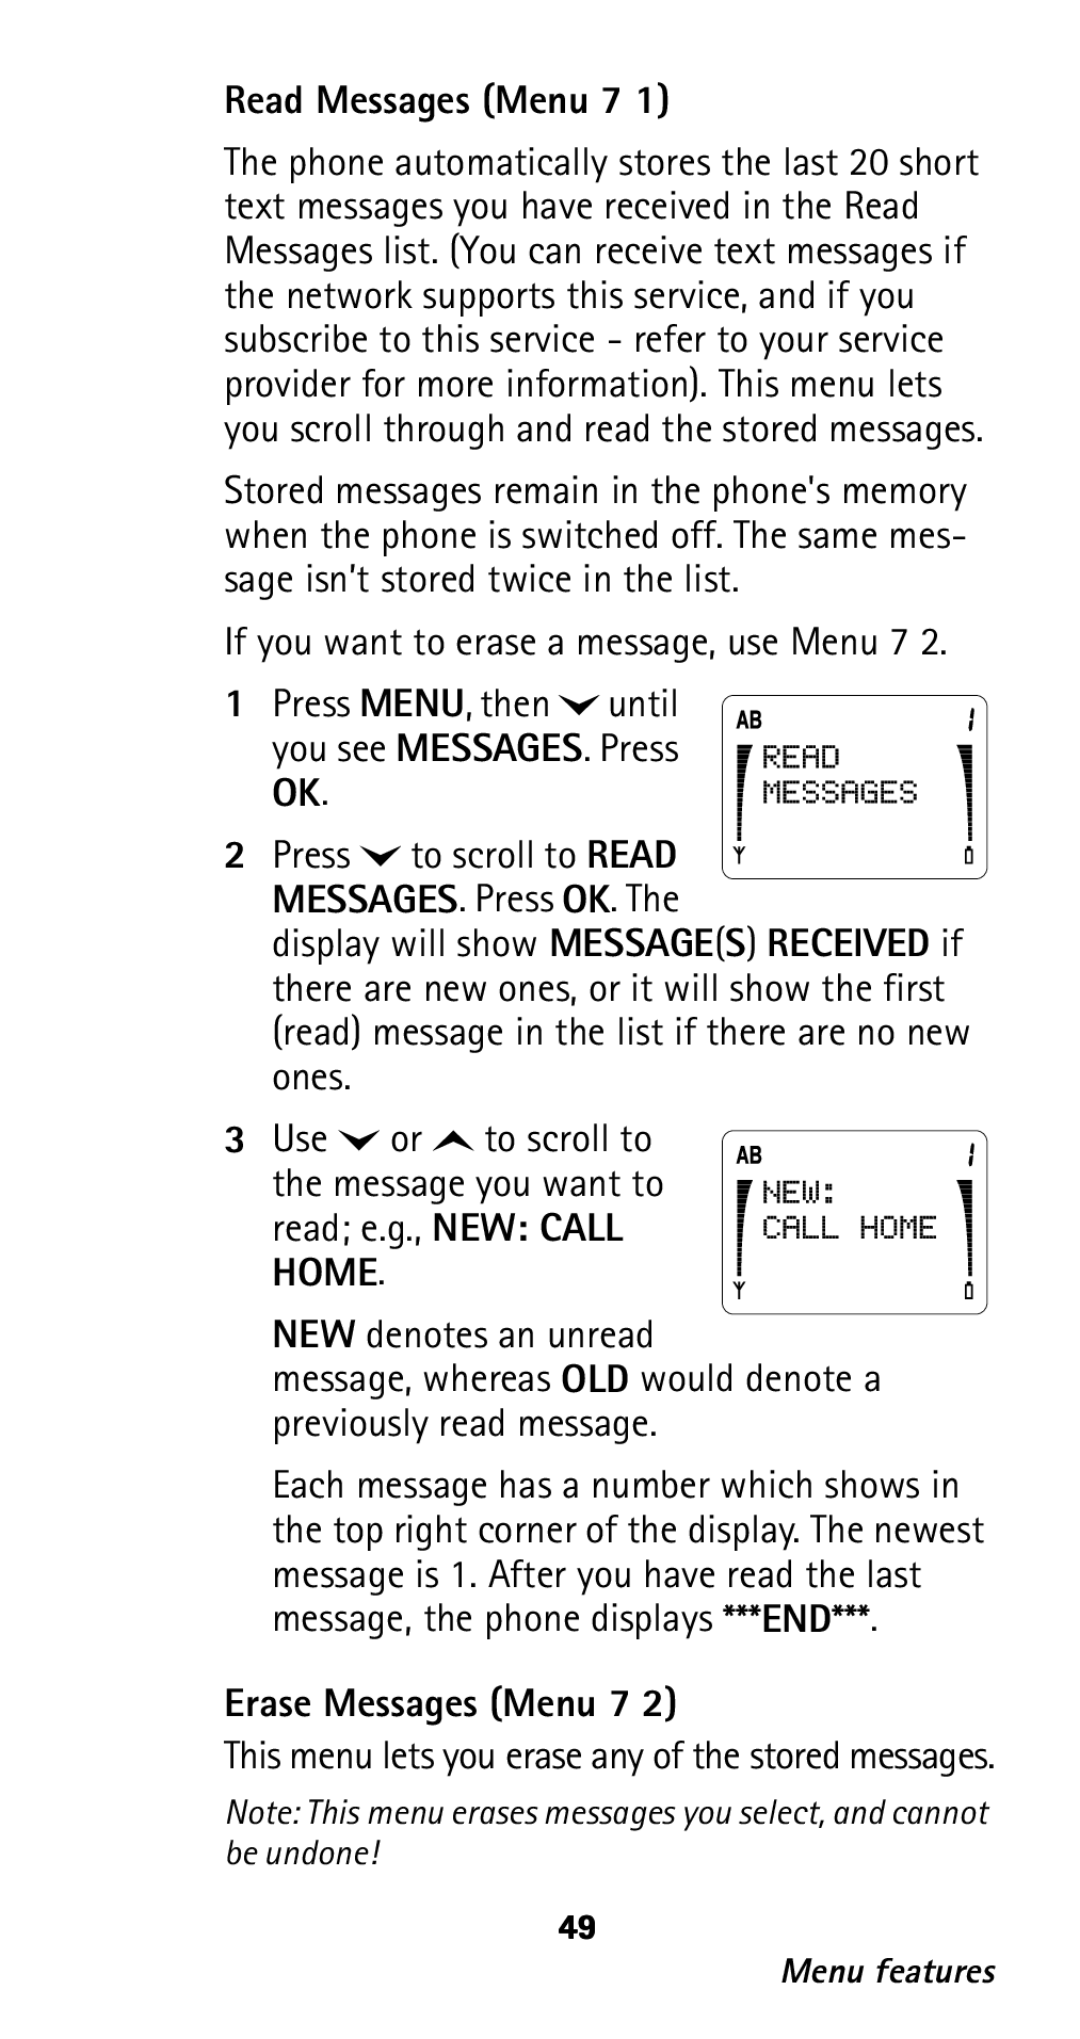 Nokia 282 owner manual Read Messages Menu 7, Erase Messages Menu 7 